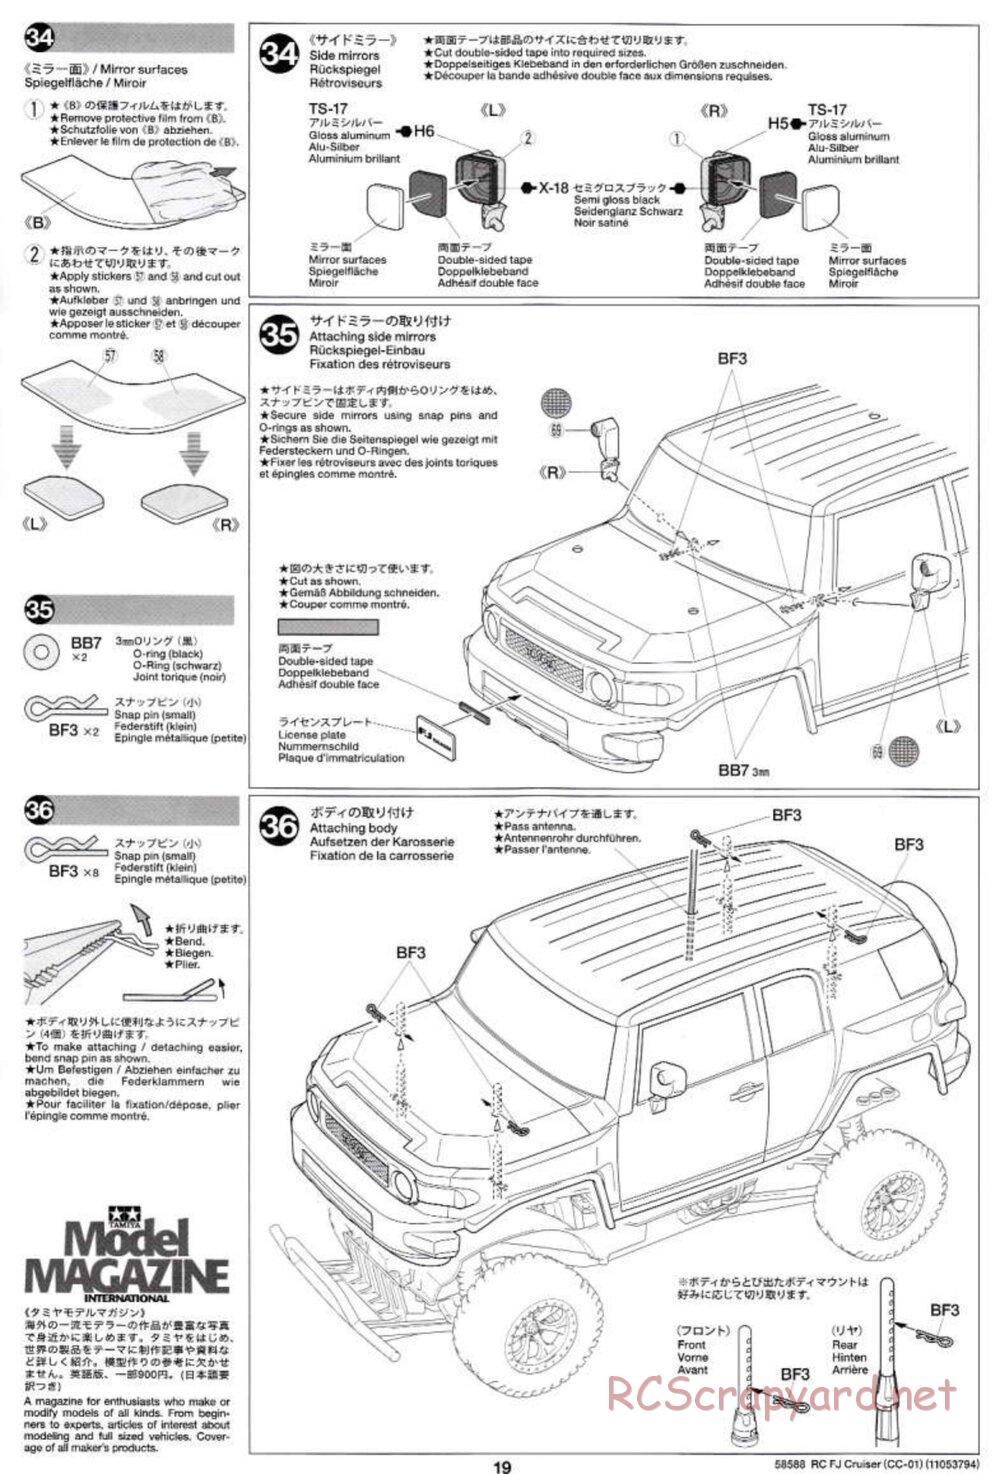 Tamiya - Toyota FJ Cruiser - CC-01 Chassis - Manual - Page 19